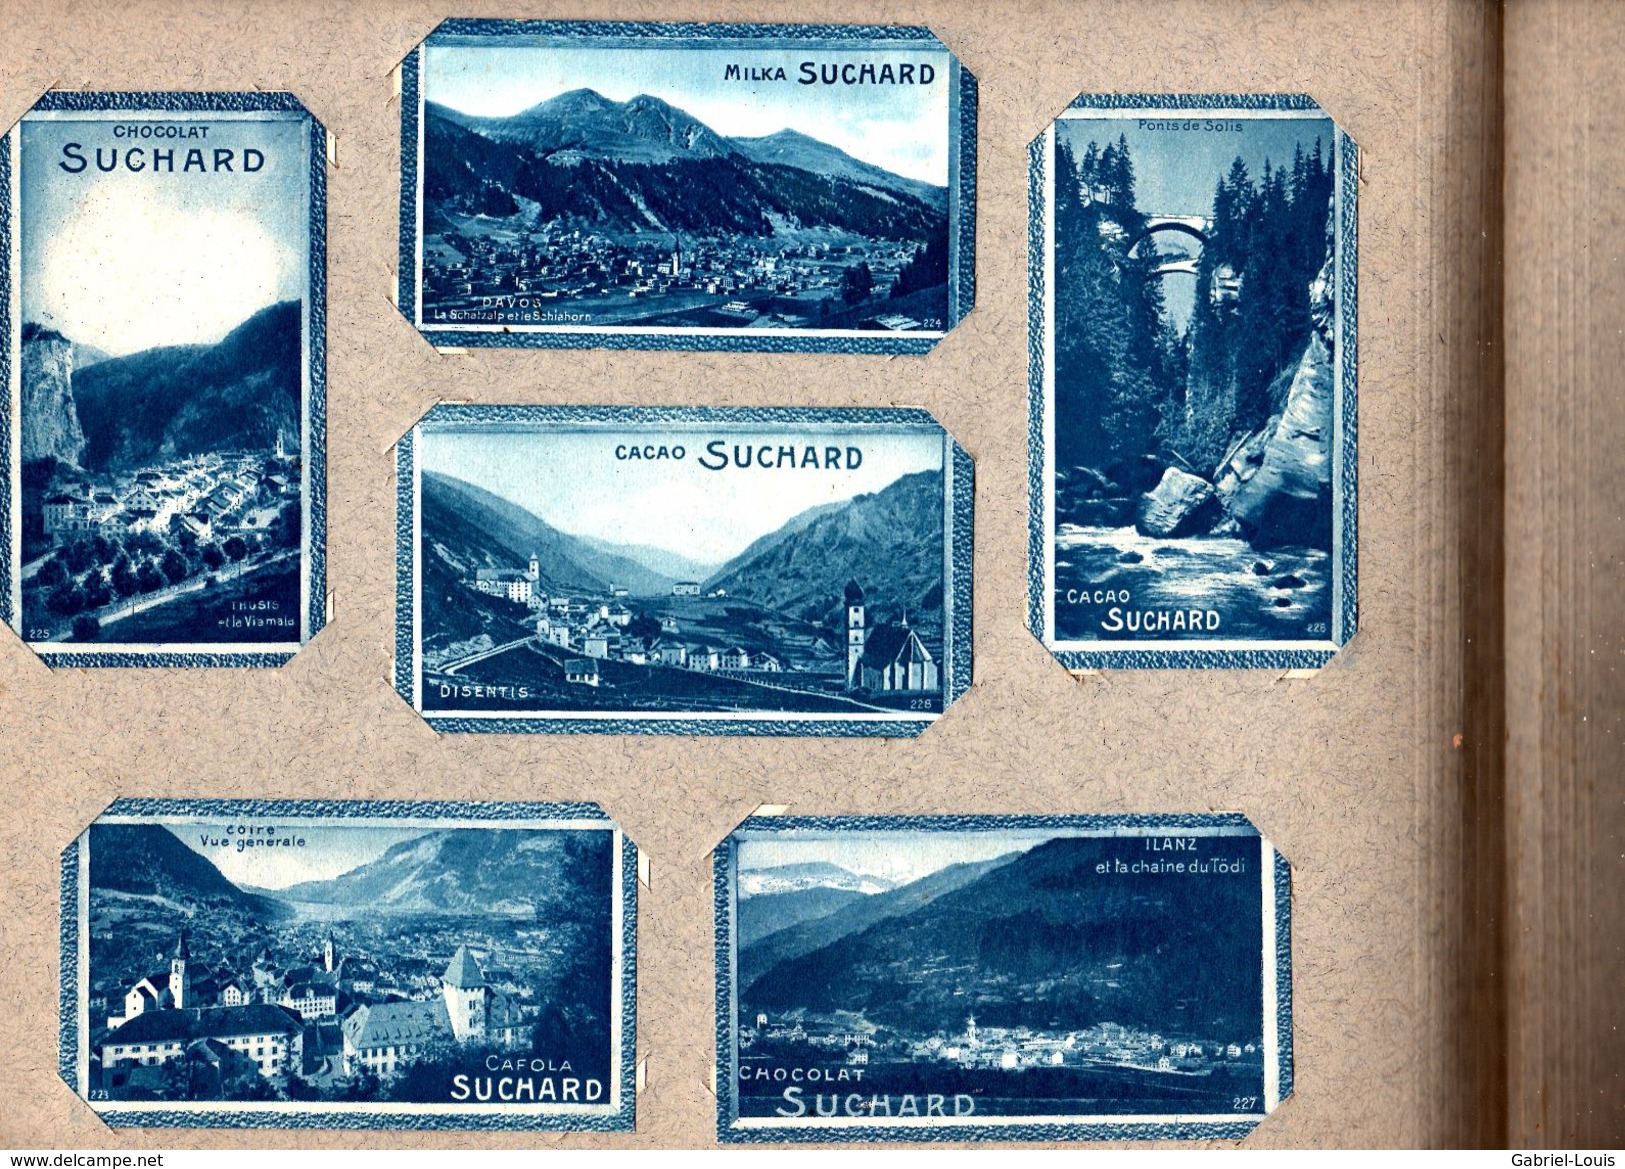 Complet: Album de 216 vignettes - Chocolat SUCHARD - la Suisse Pittoresque - vers 1900 /  Cartes 10.5X6 / Album 32X24